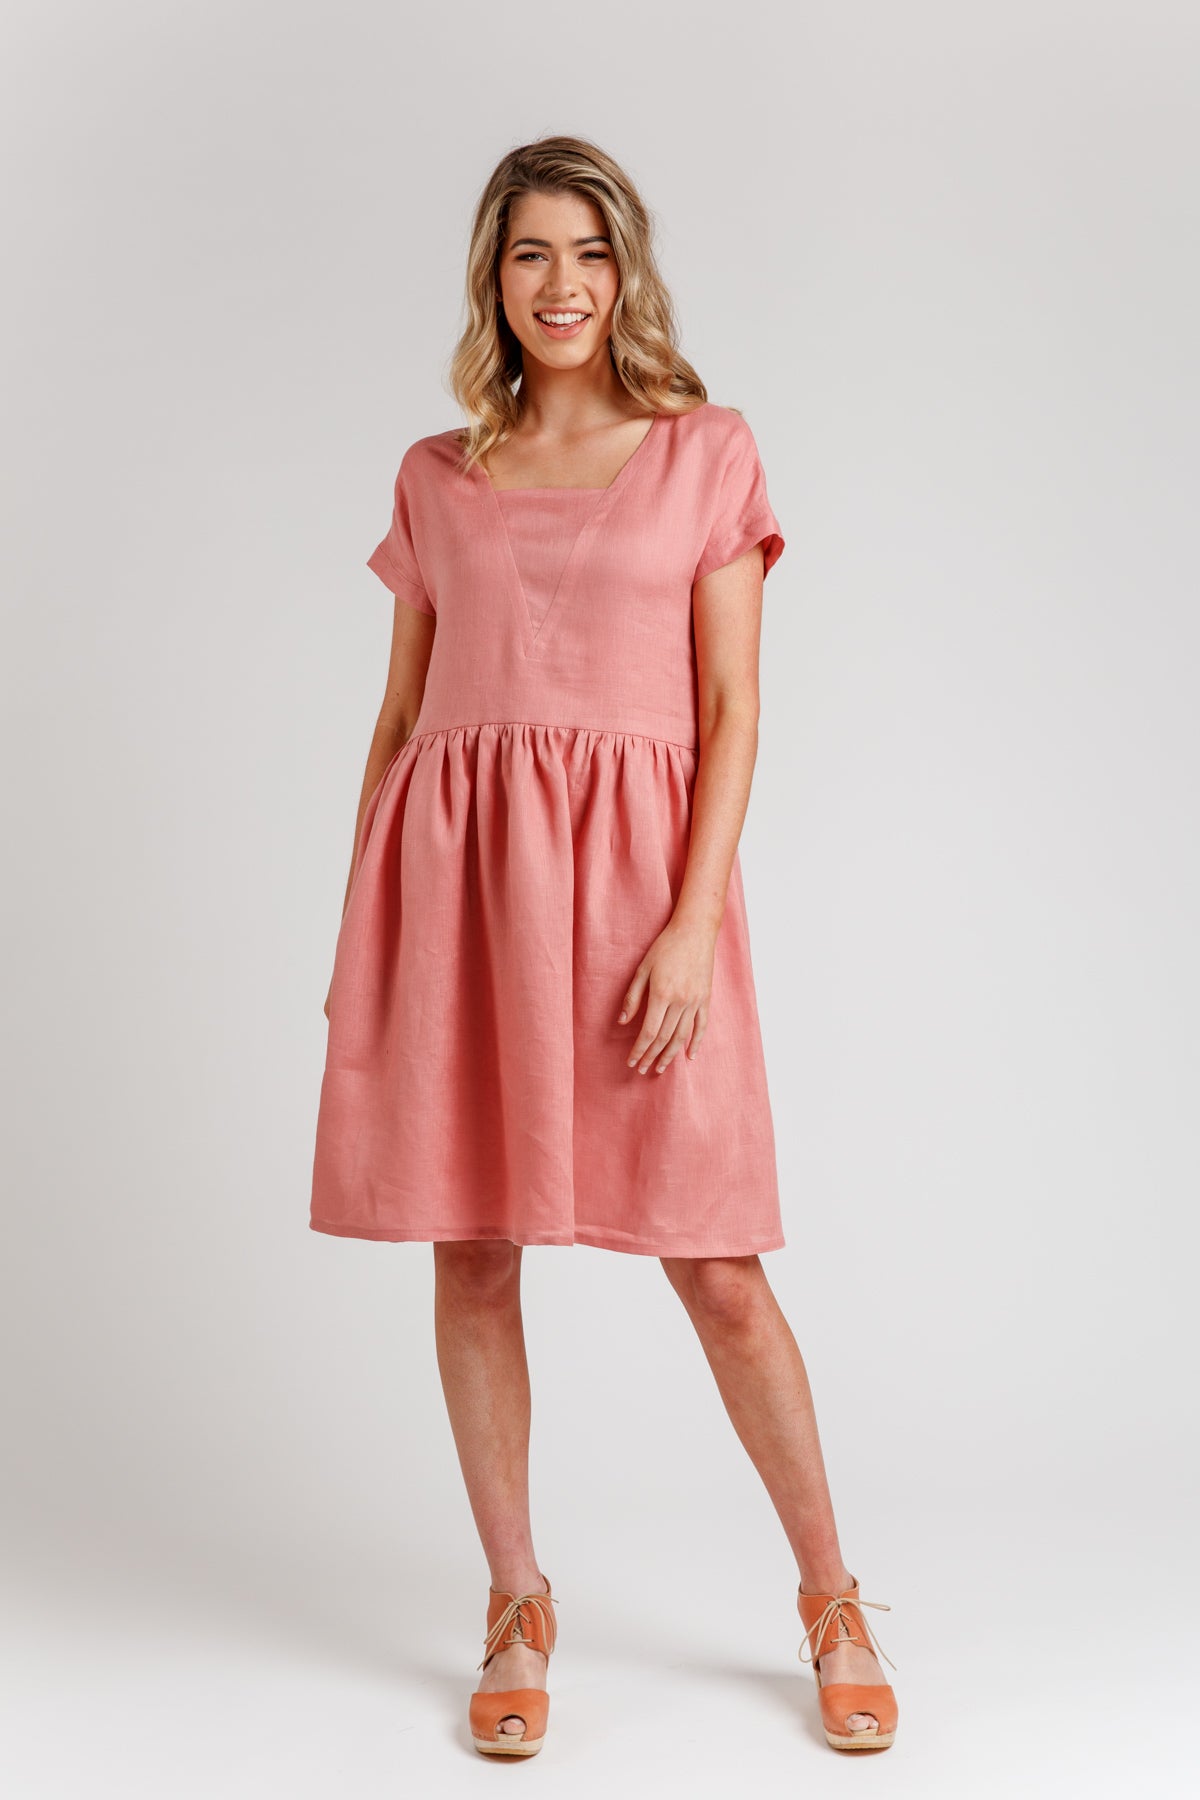 Olive Dress & Top | Megan Nielsen - MaaiDesign